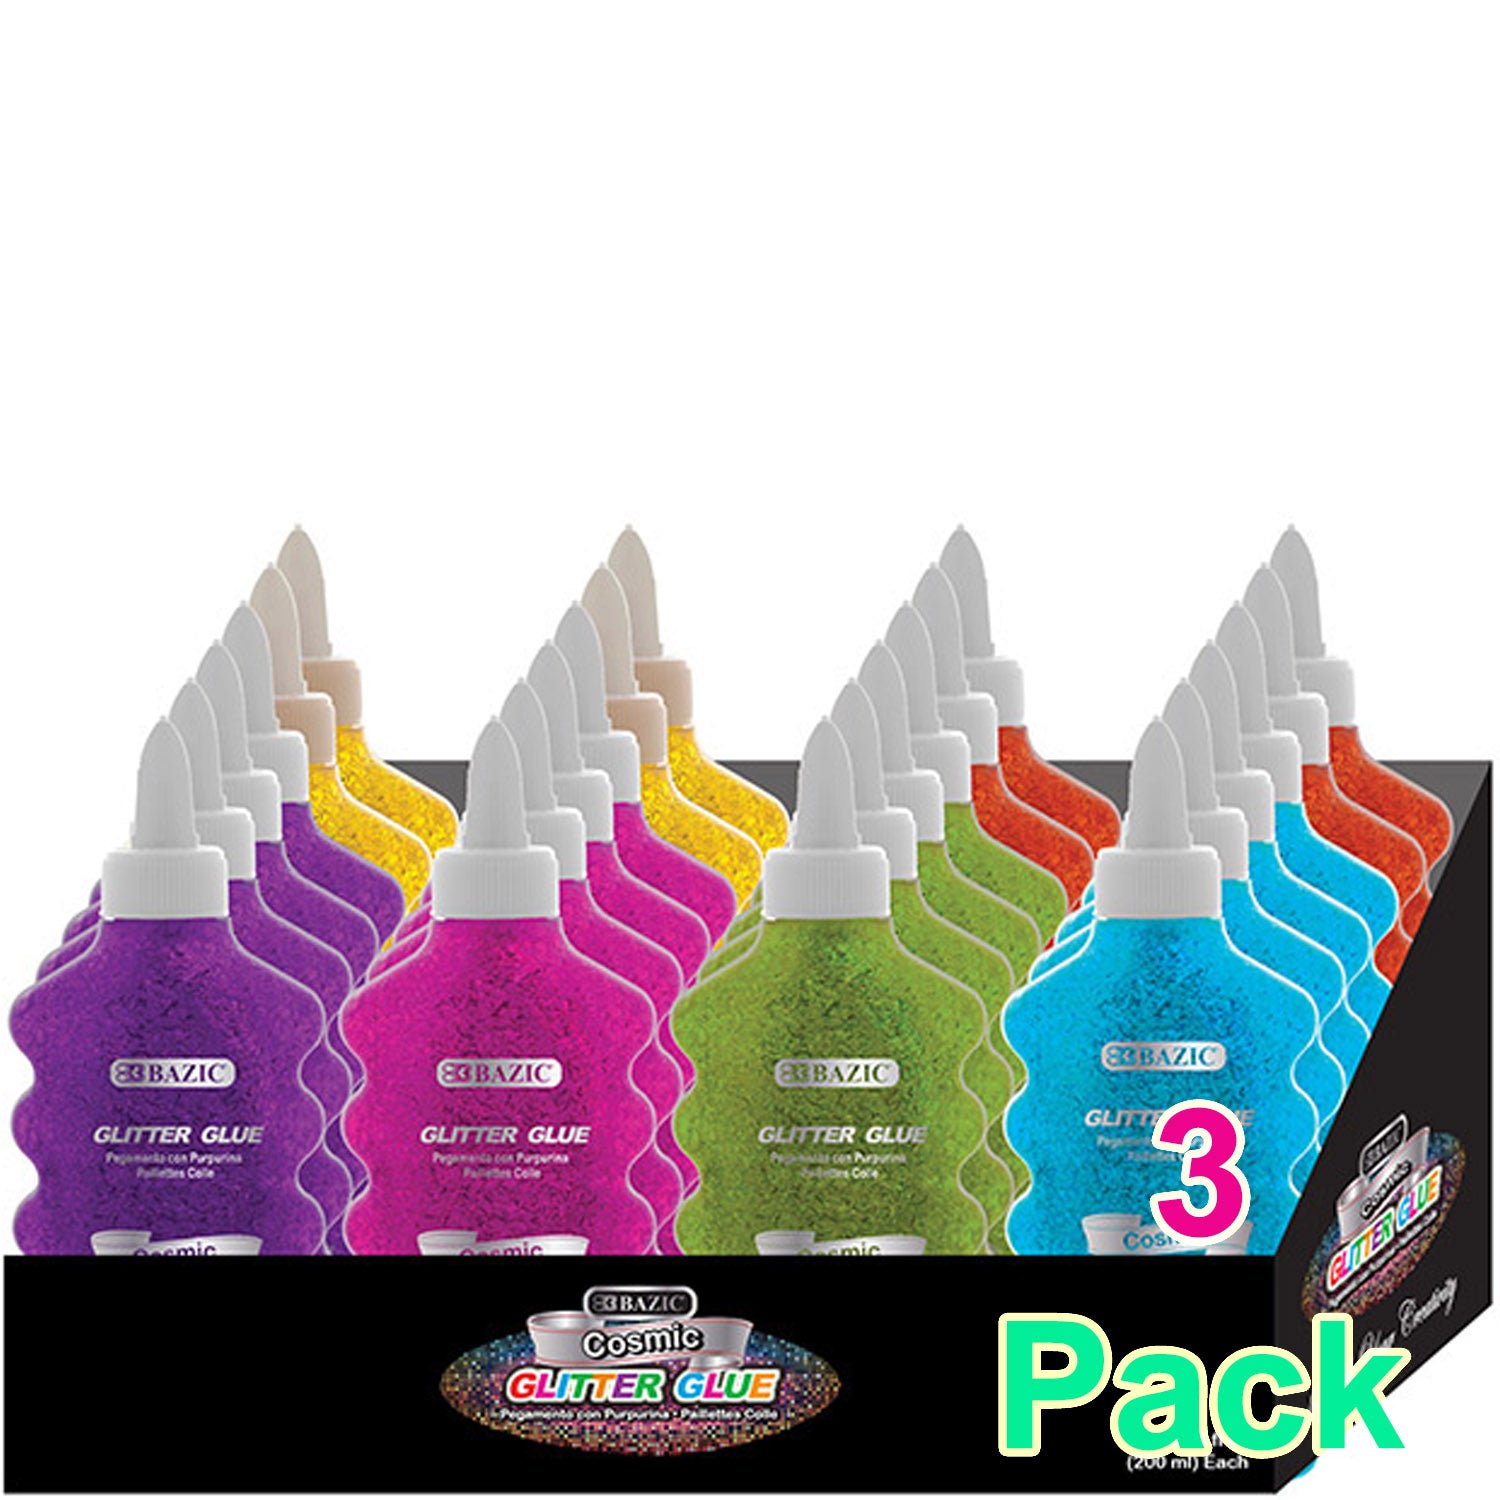 Glitter Glue Cosmic SeriesWashable Sparkling Slime Colors - 6.76 fl oz (200ml)3-Pack - G8 Central